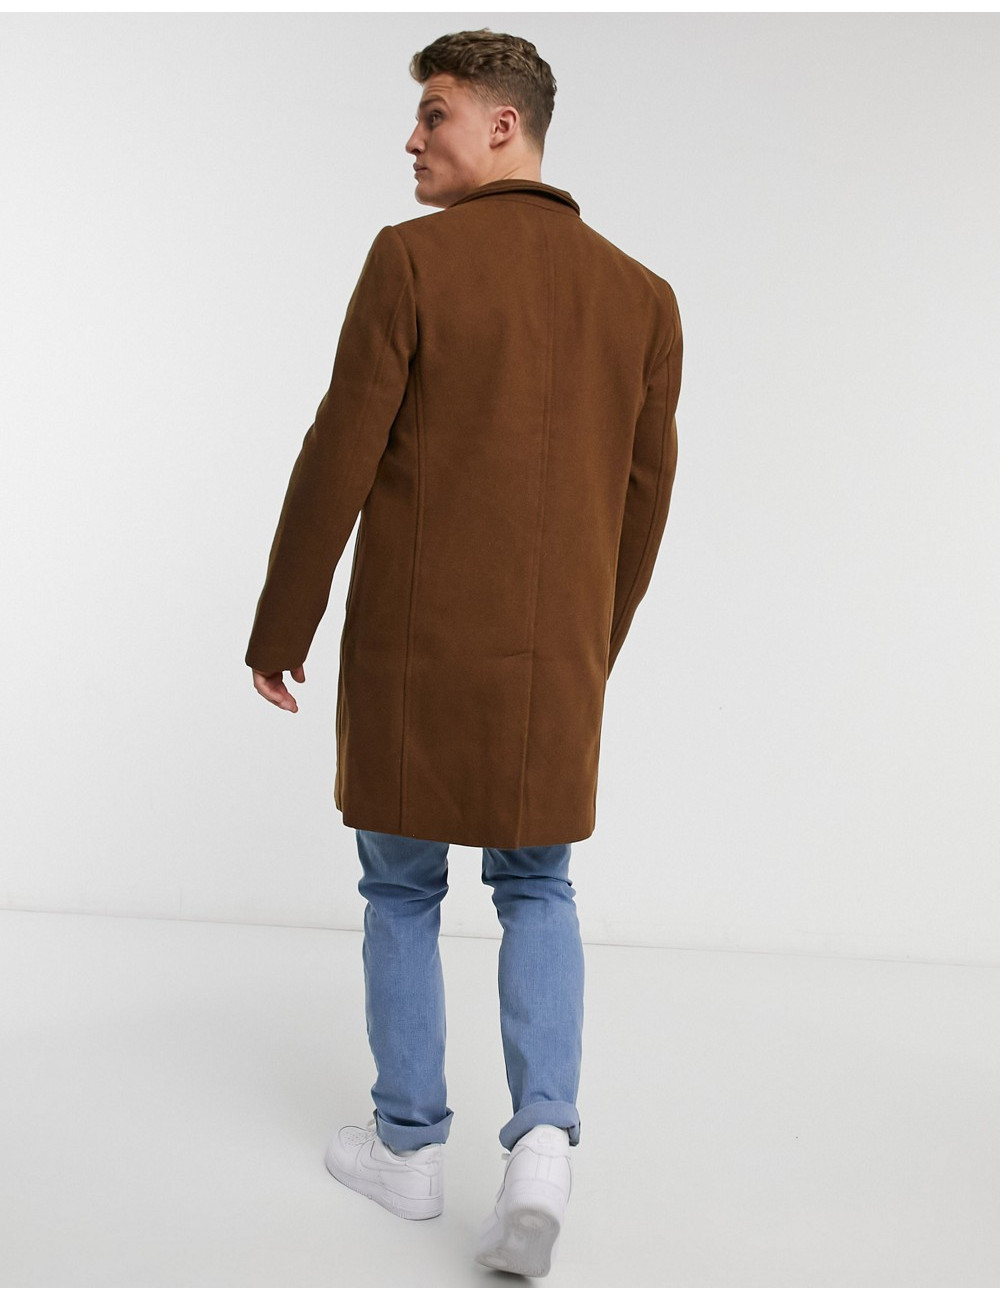 Tom Tailor wool coat in brown